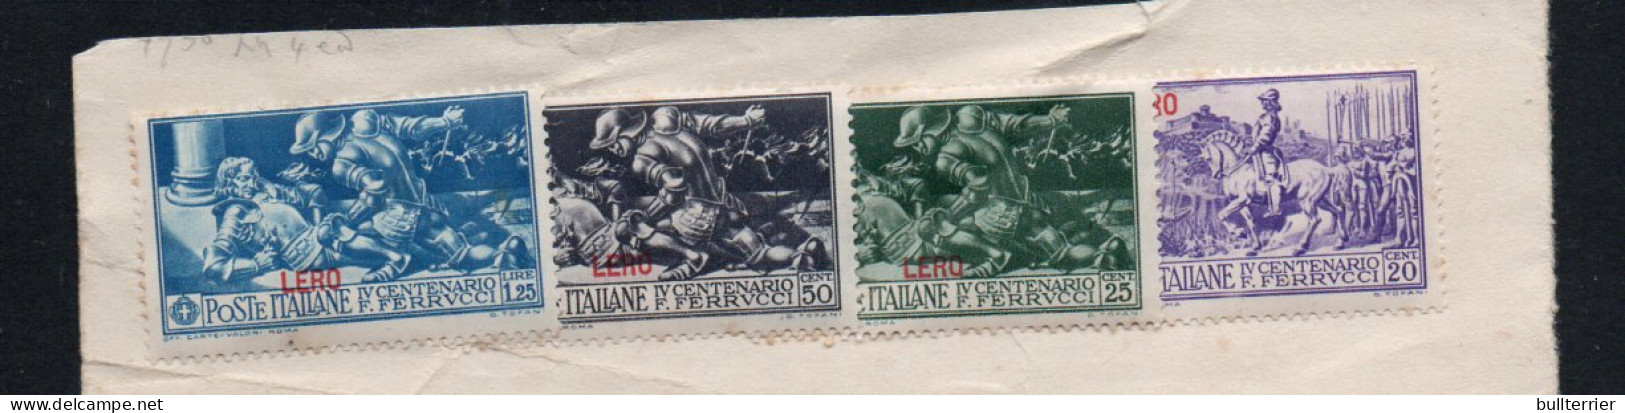 AEGEAN ISLANDS  /  LERO   -1930 FERRUCCI 20C. 25C  50C AND 1L25 MINT HINGED  SG CAT £23 - Egeo (Nisiro)